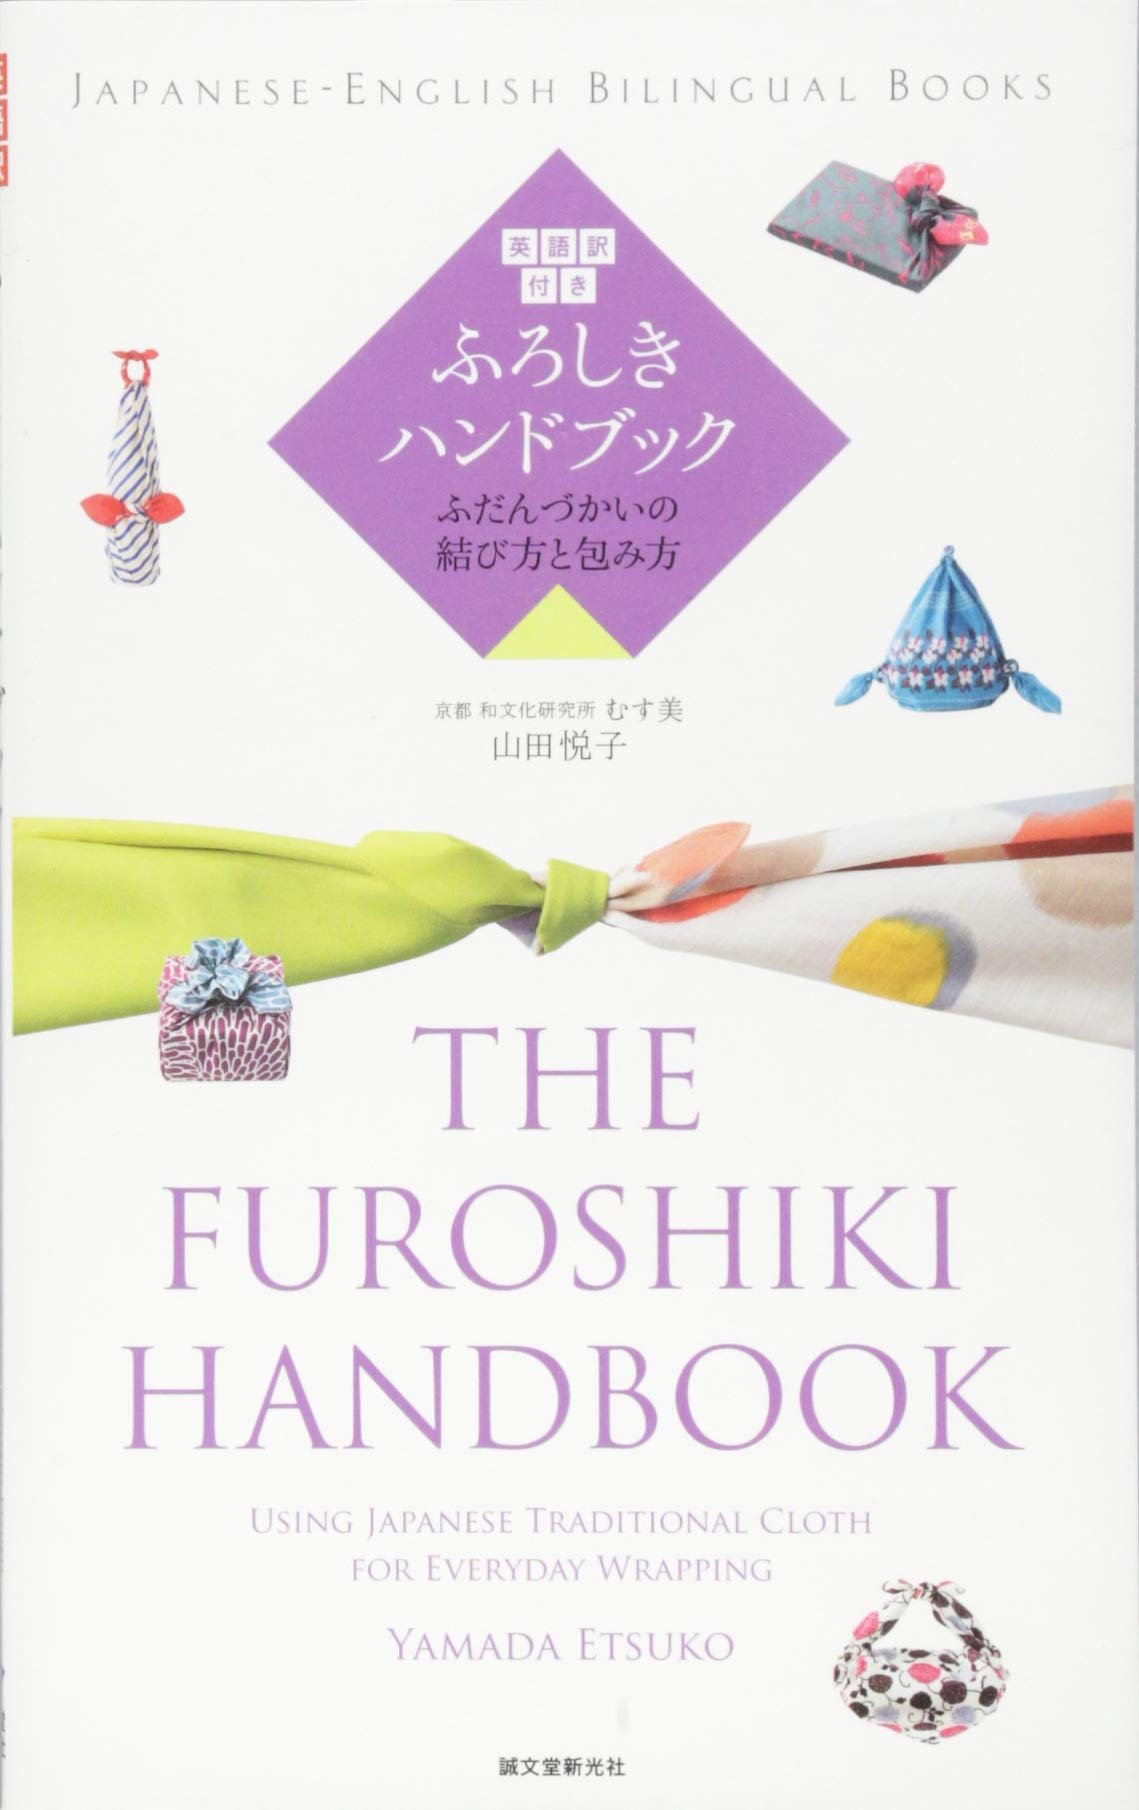 The Furoshiki Handbook (Japanese-English Bilingual Books)